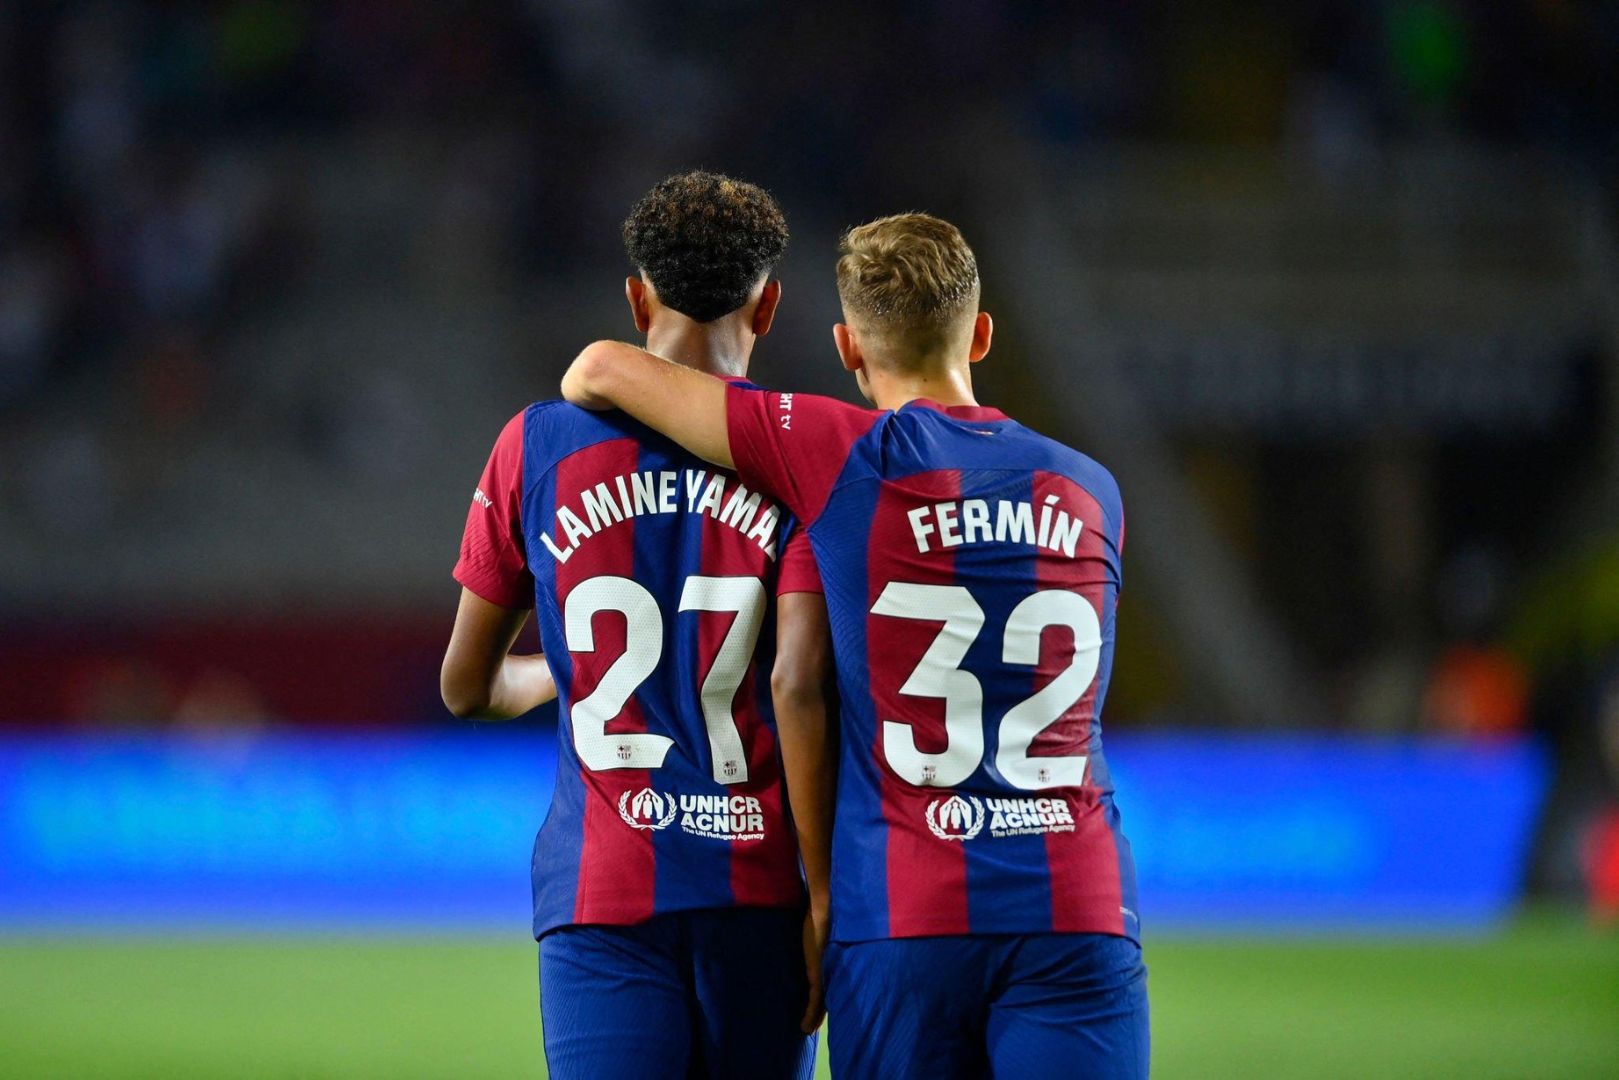 Barcelona players Fermin Lopez and Lamine Yamal